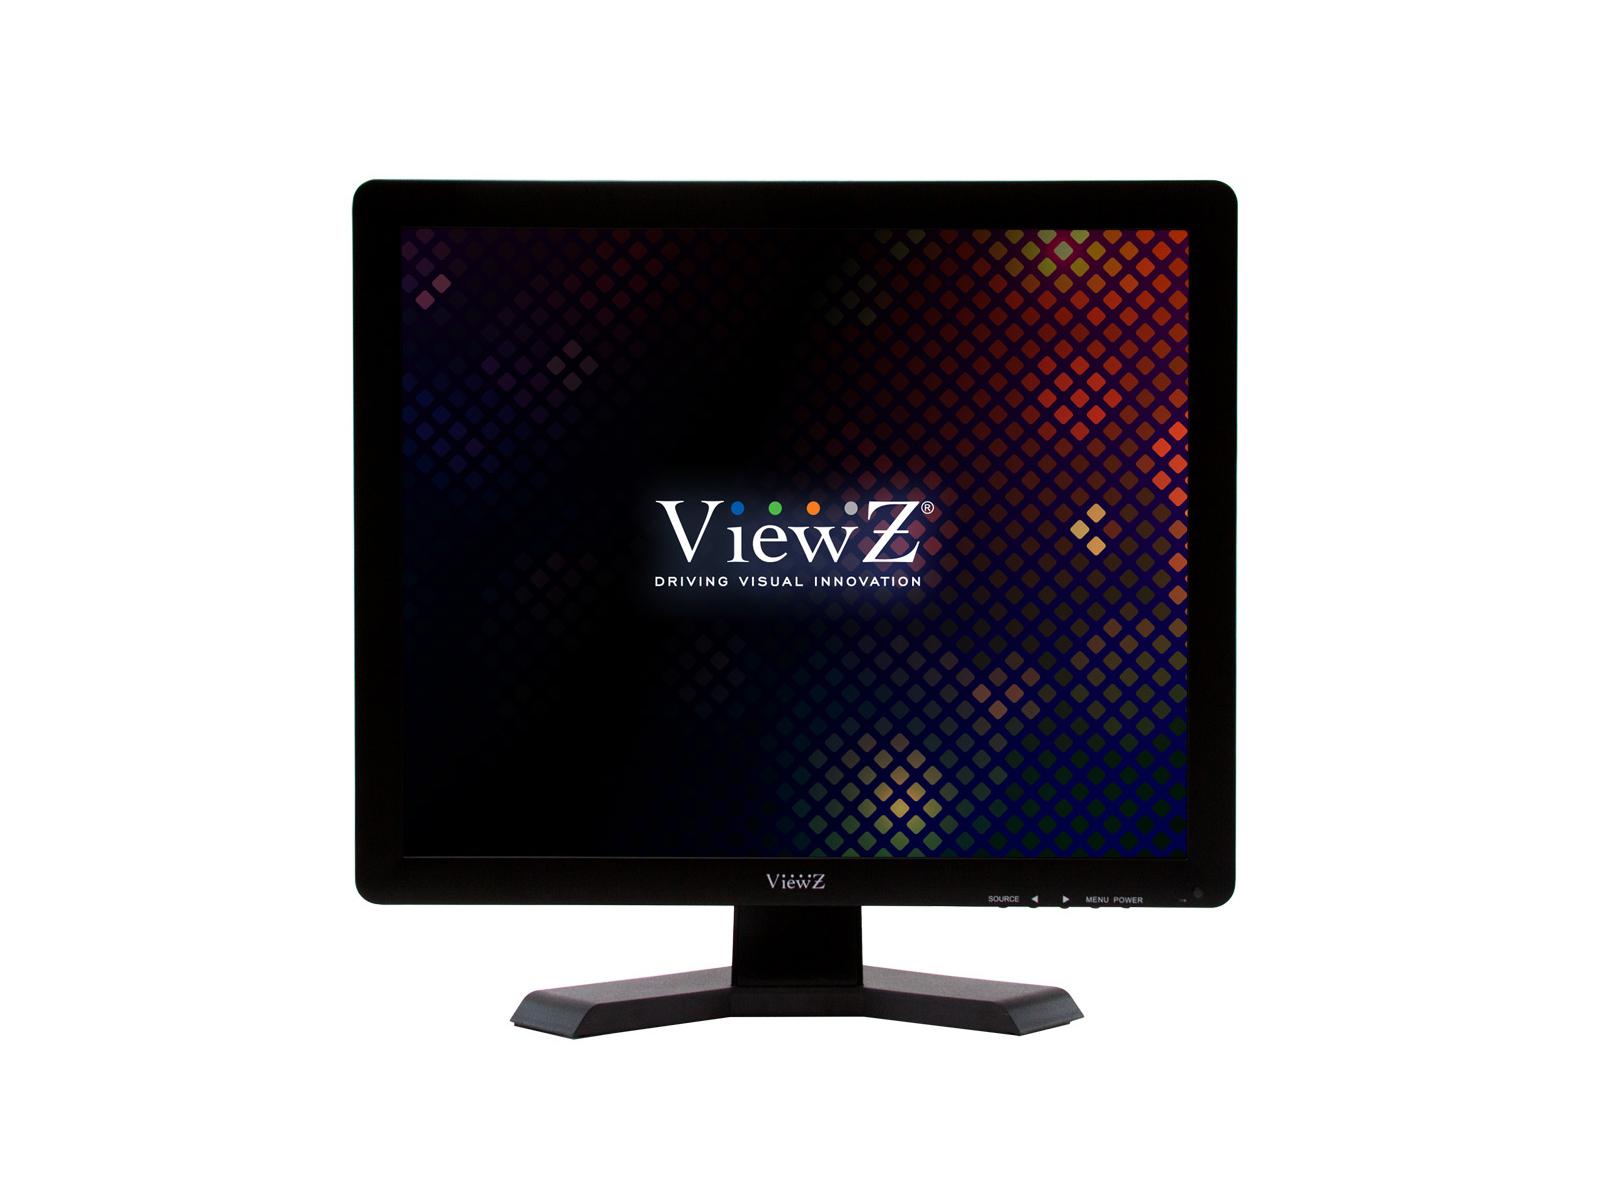 VZ-17RTN 17 inch 1280x1024 HDMI/VGA Professional LED CCTV Monitor by ViewZ